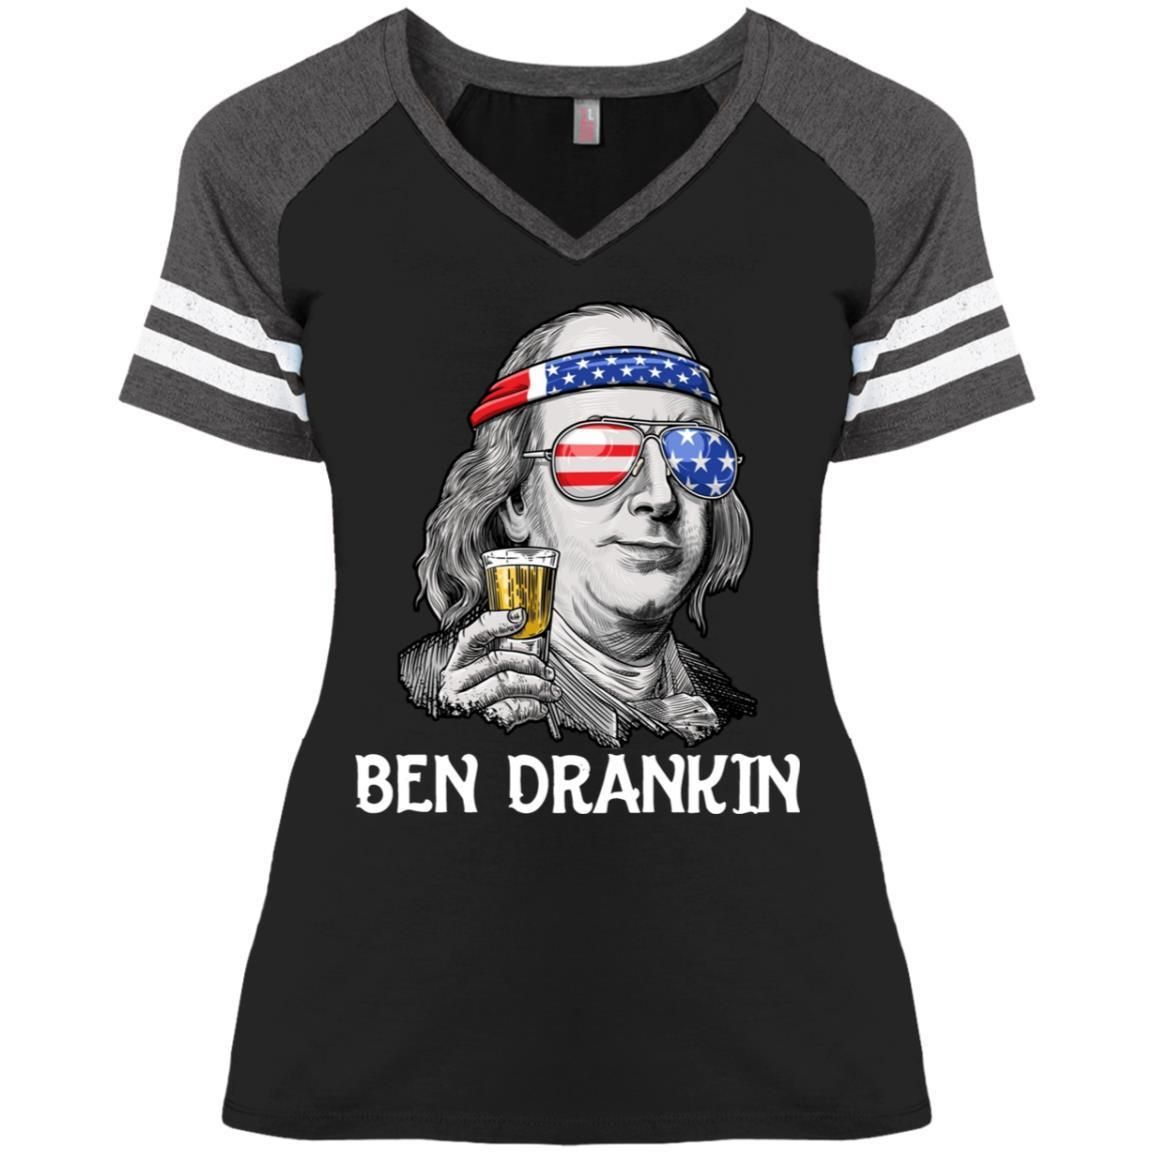 Ben Drankin Benjamin Franklin 4th of July Independence shirts